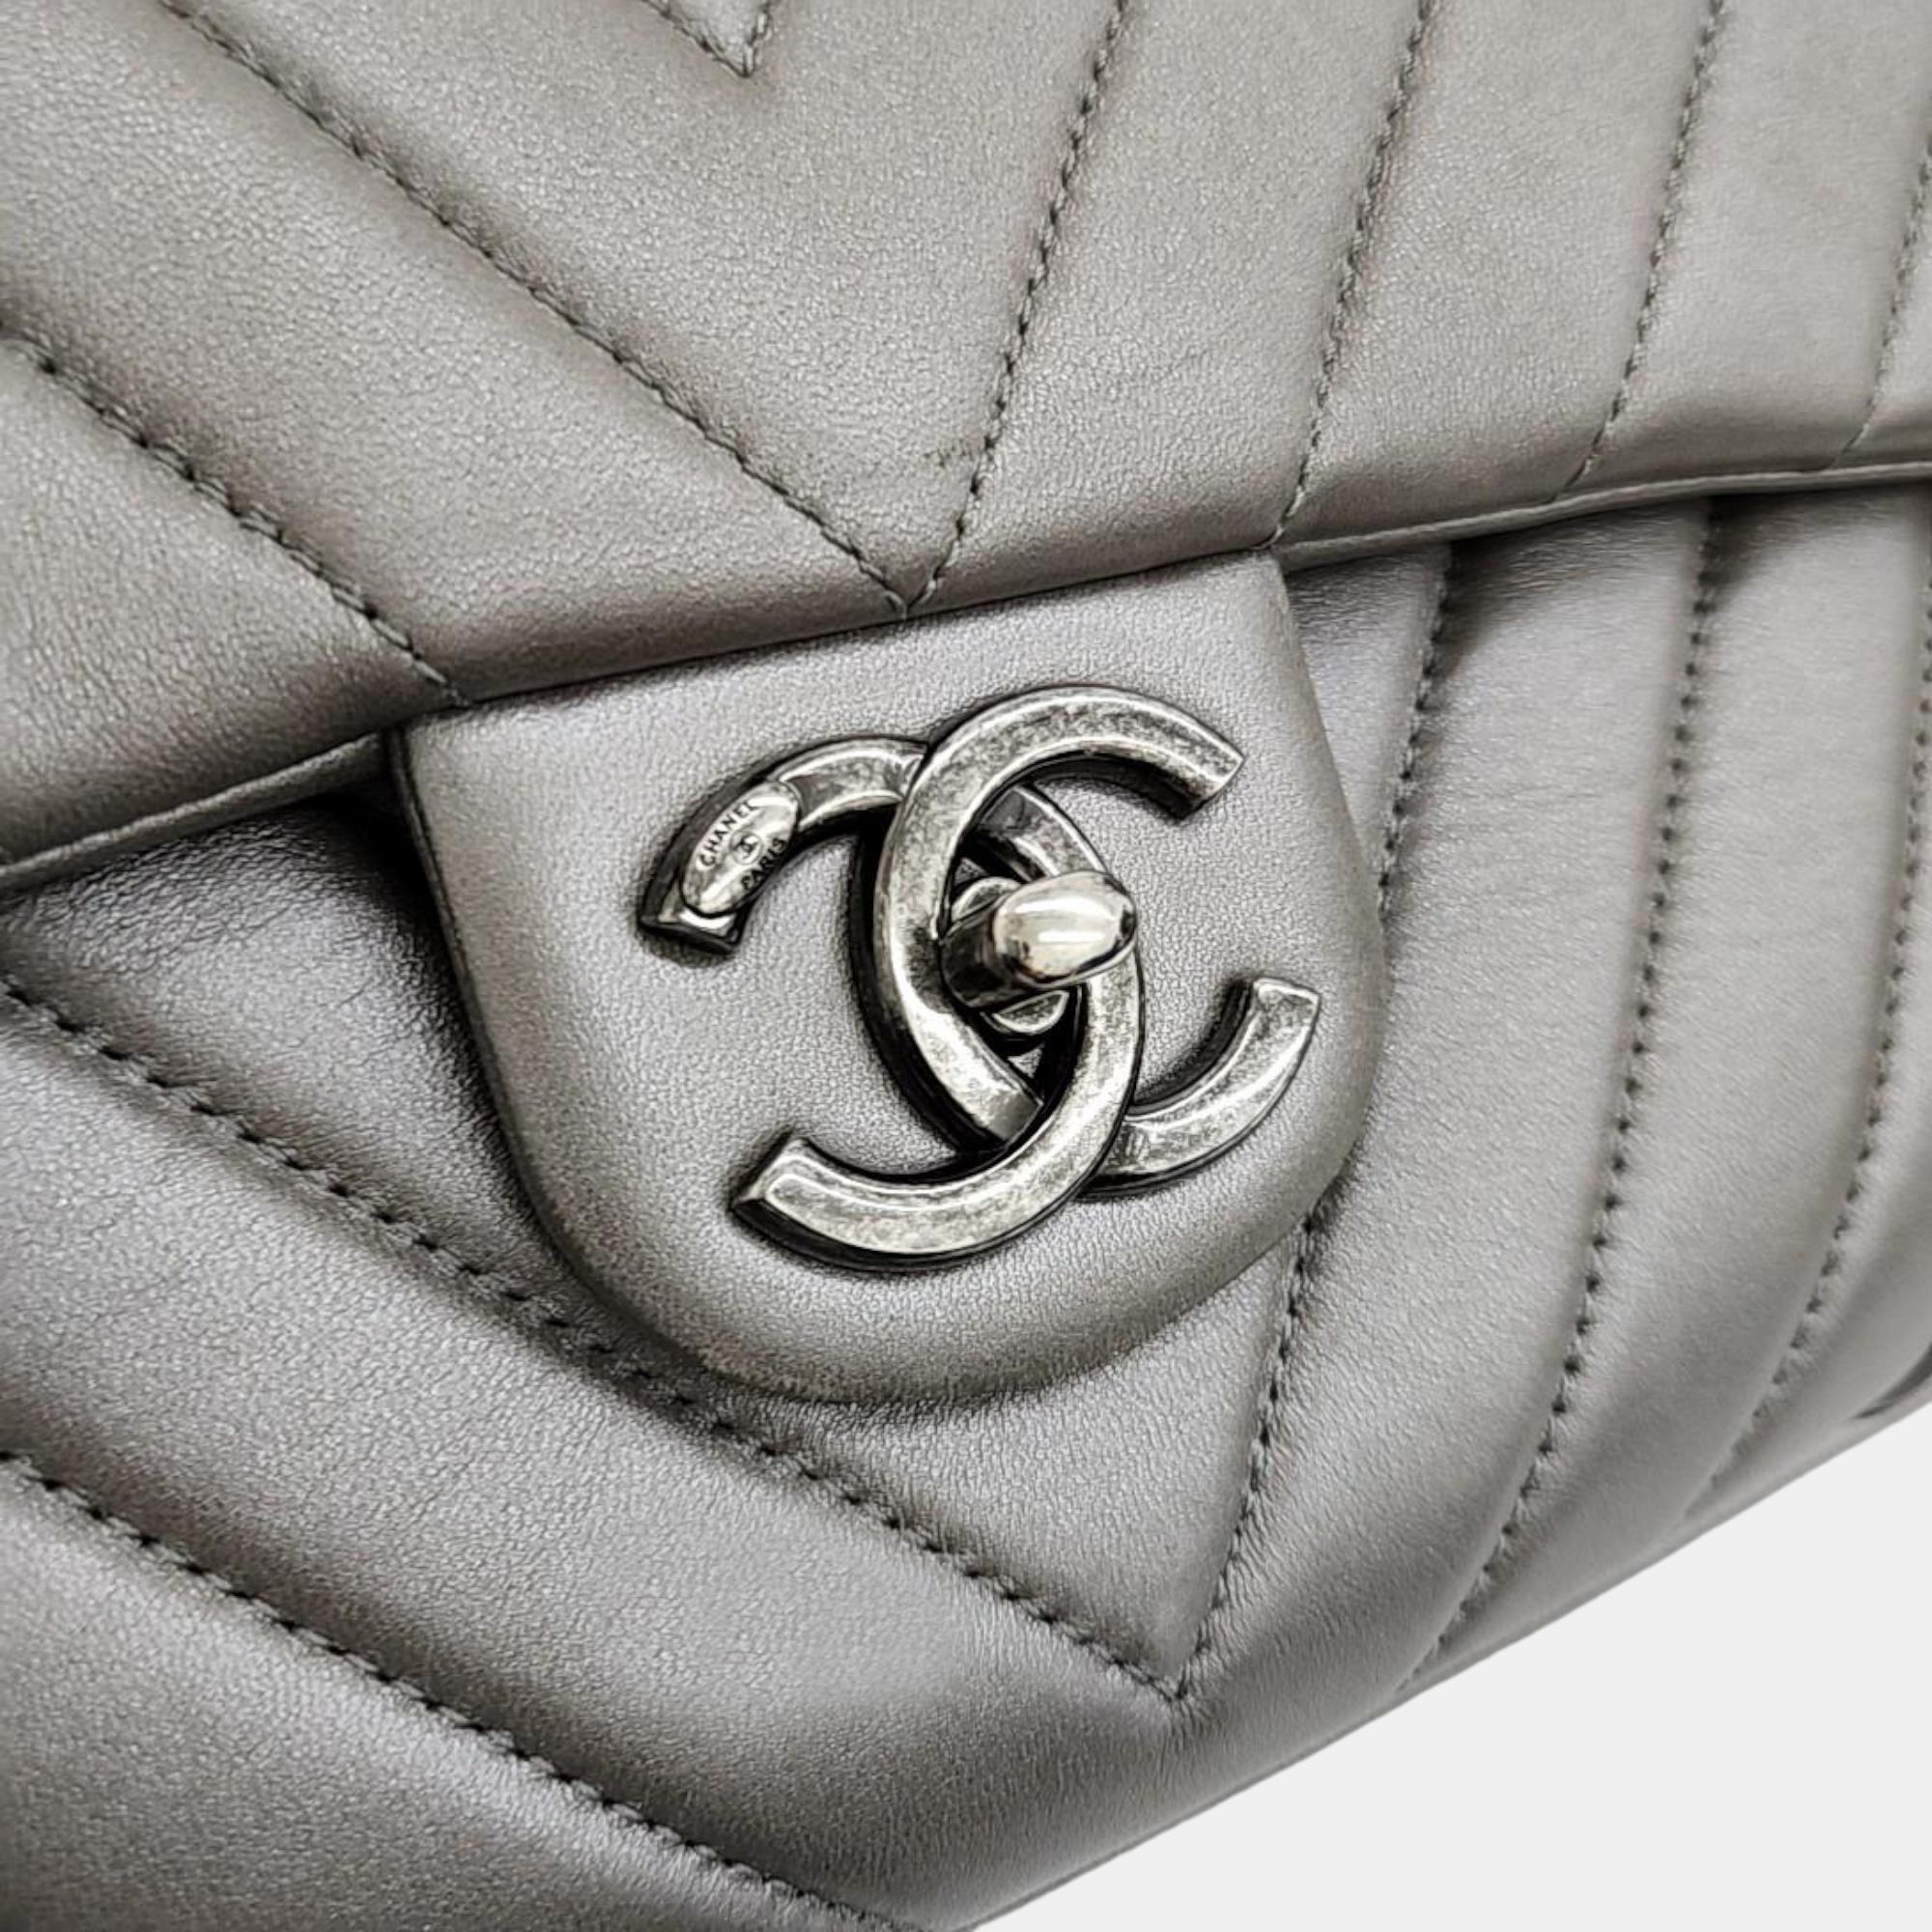 Chanel Grey Chevron Flap Bag